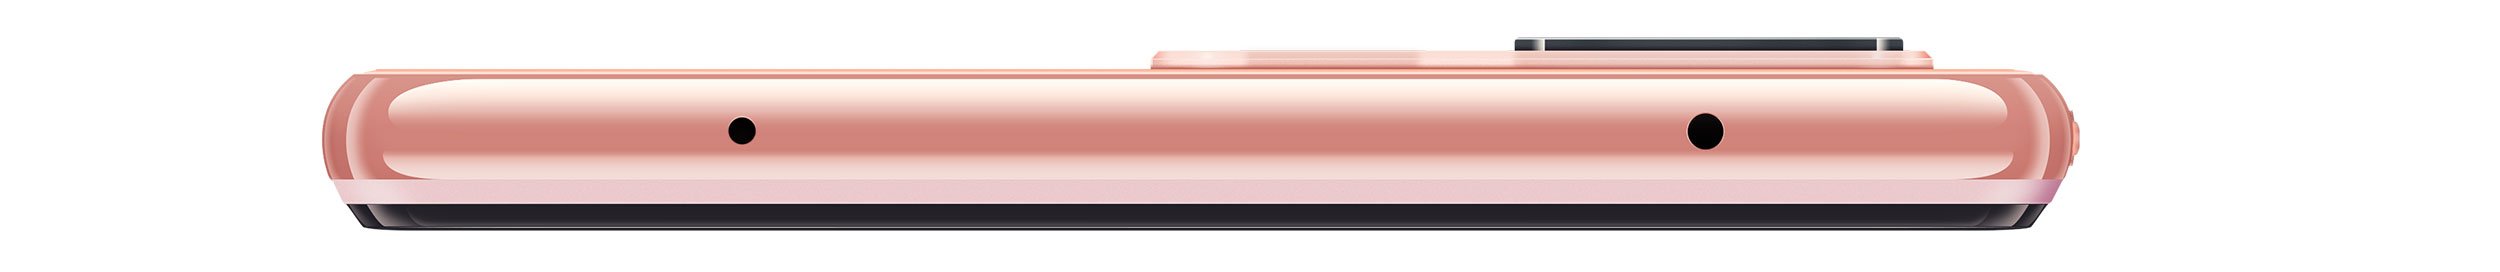 Купить Смартфон Xiaomi Mi 11 Lite 8/128Gb Pink